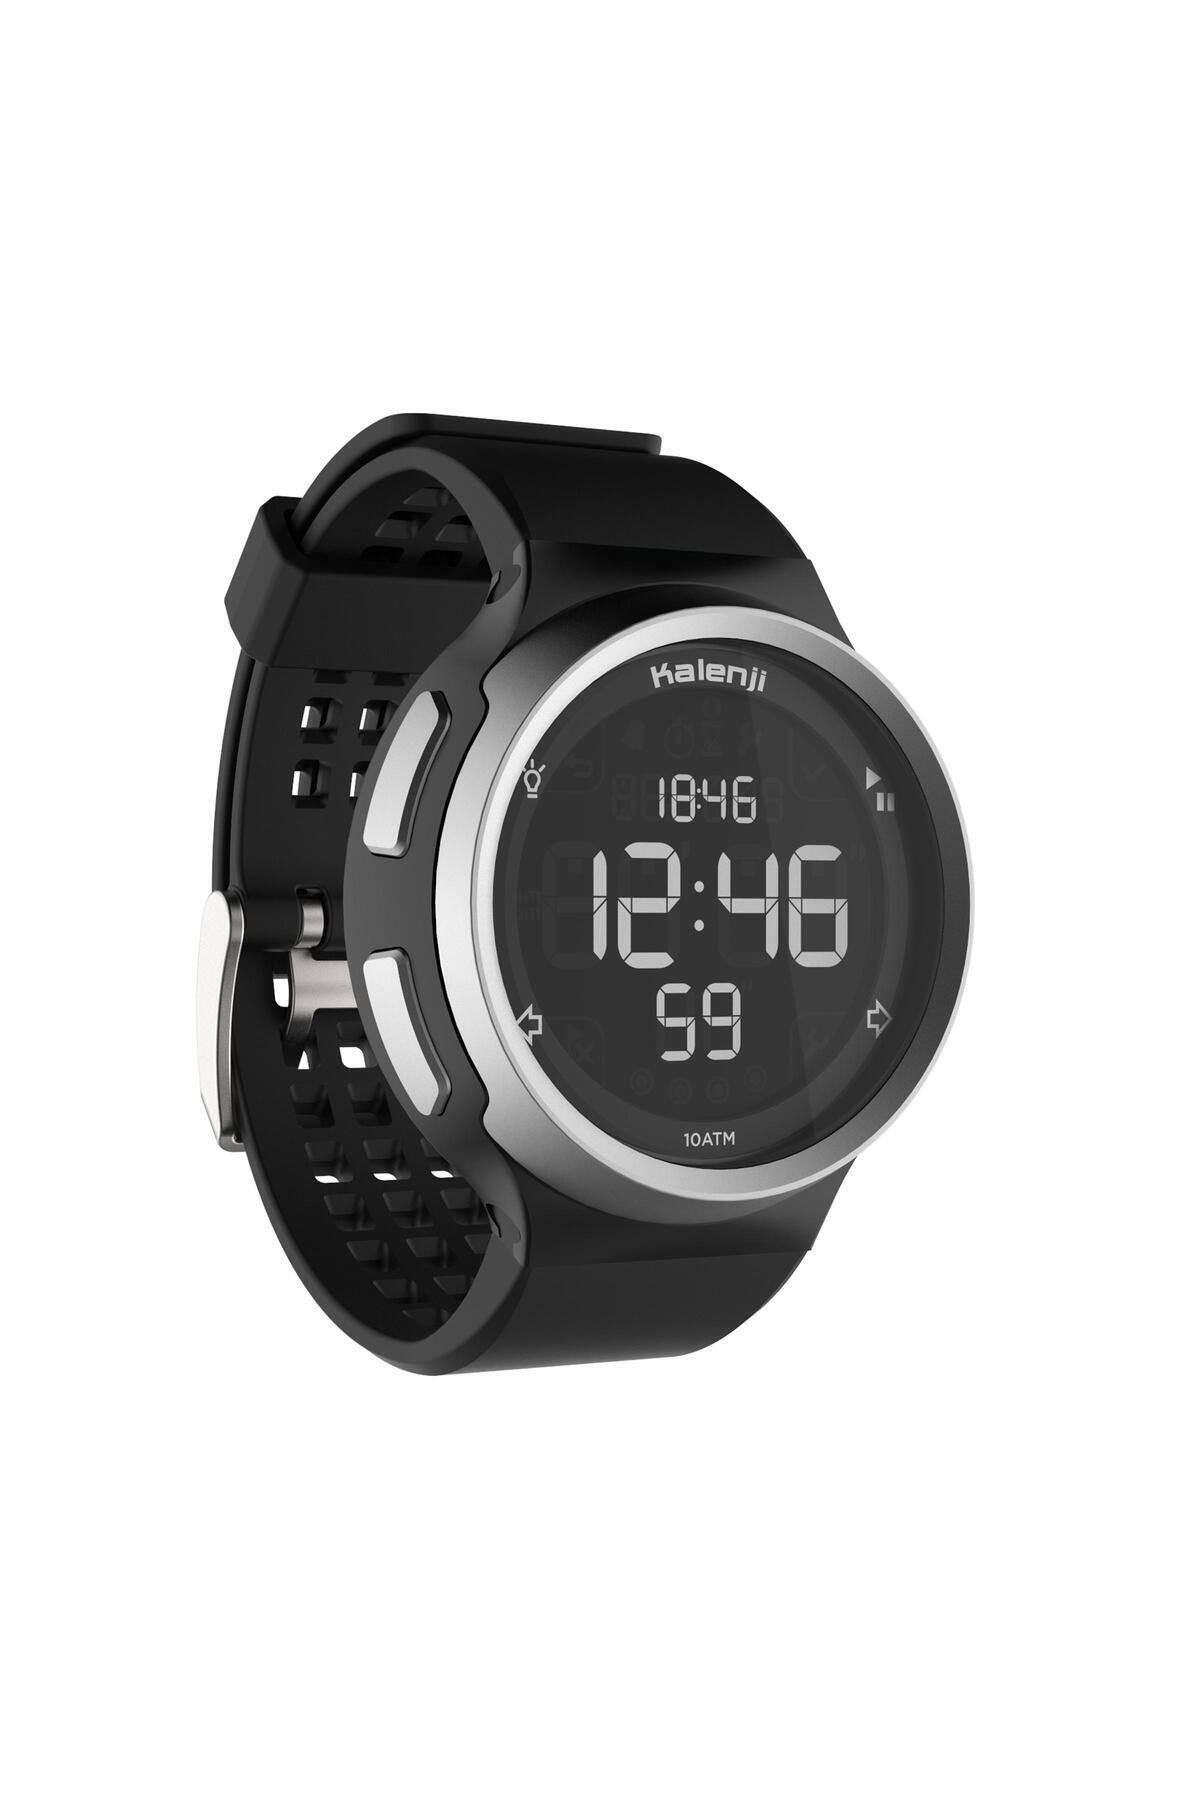 Decathlon Kalenji W900 M Kronometreli Koşu Saati - Erkek - Siyah